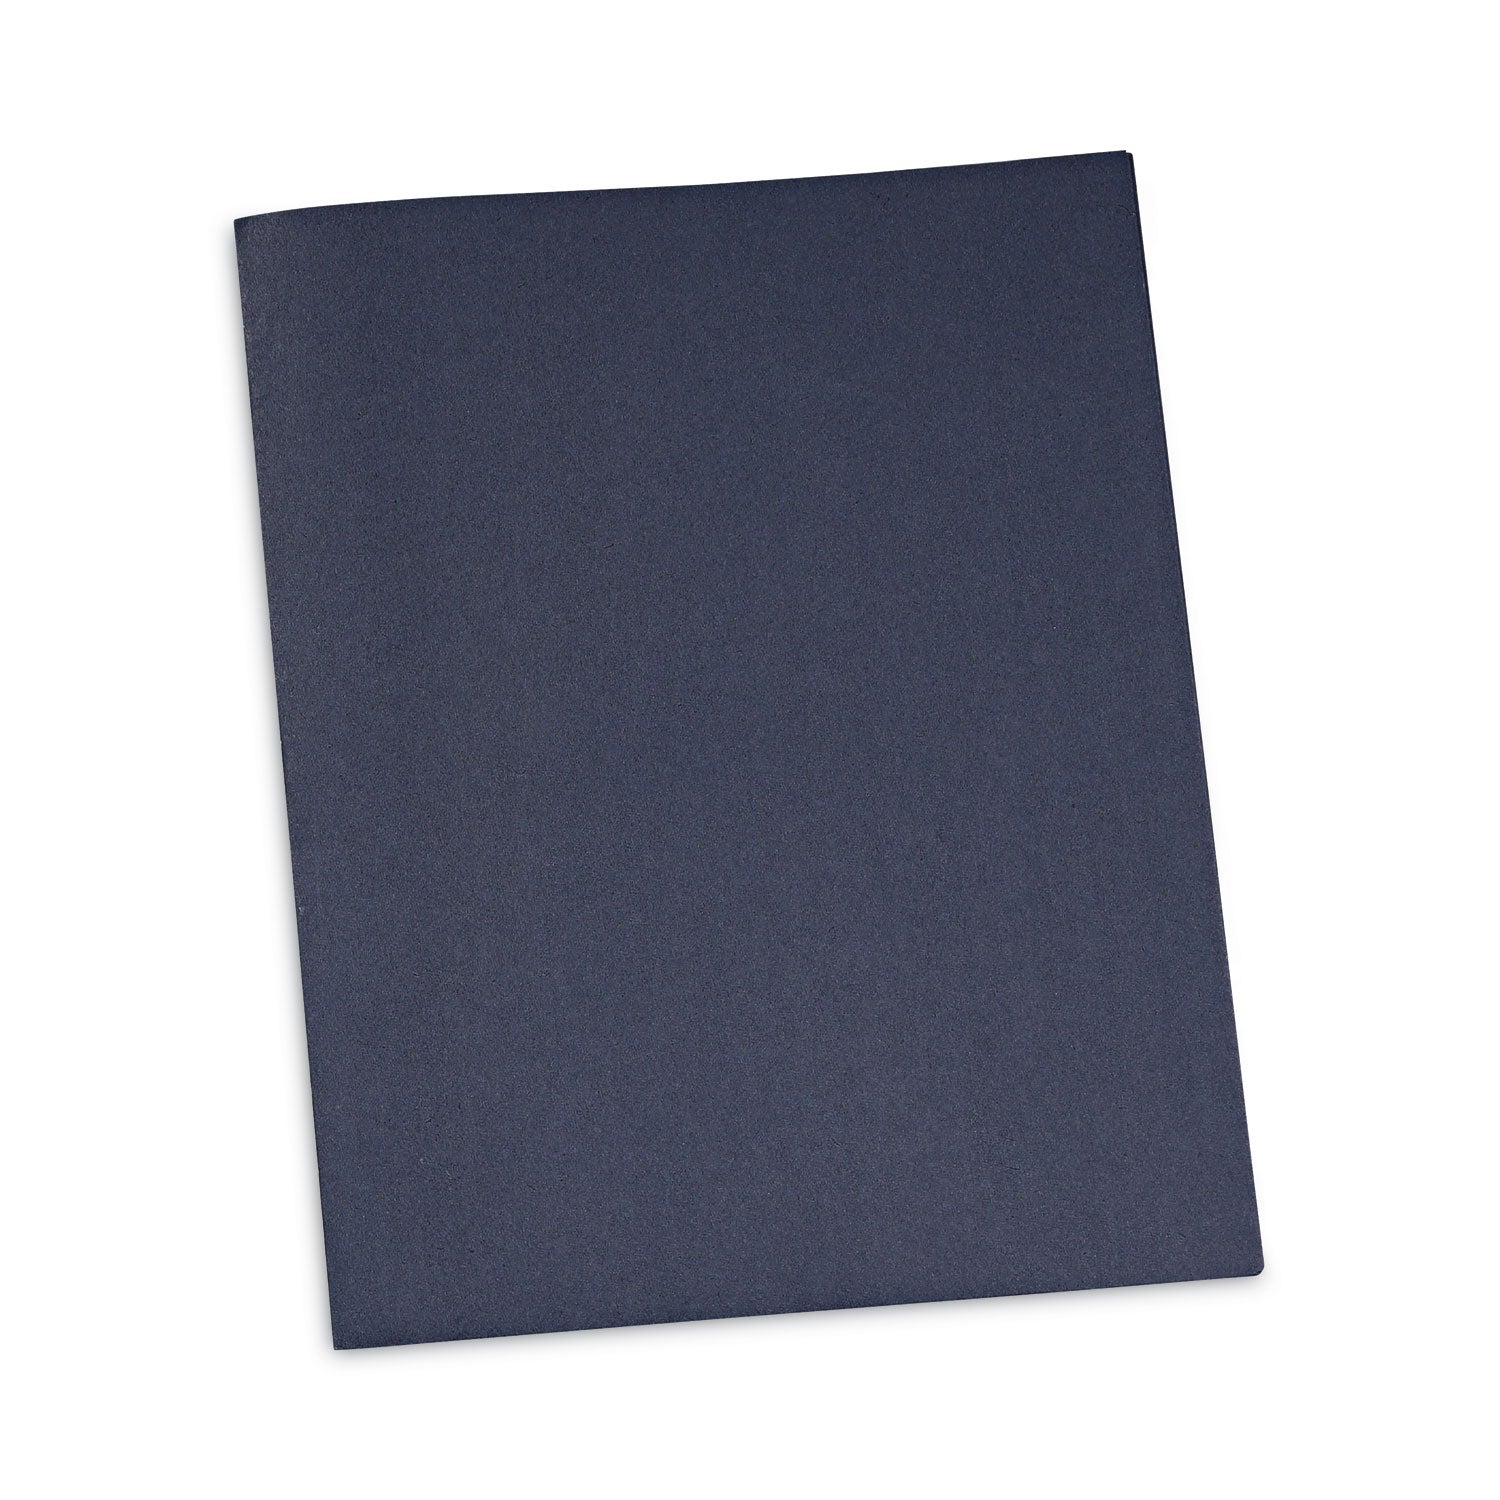 Two-Pocket Portfolios with Tang Fasteners, 0.5" Capacity, 11 x 8.5, Dark Blue, 25/Box - 